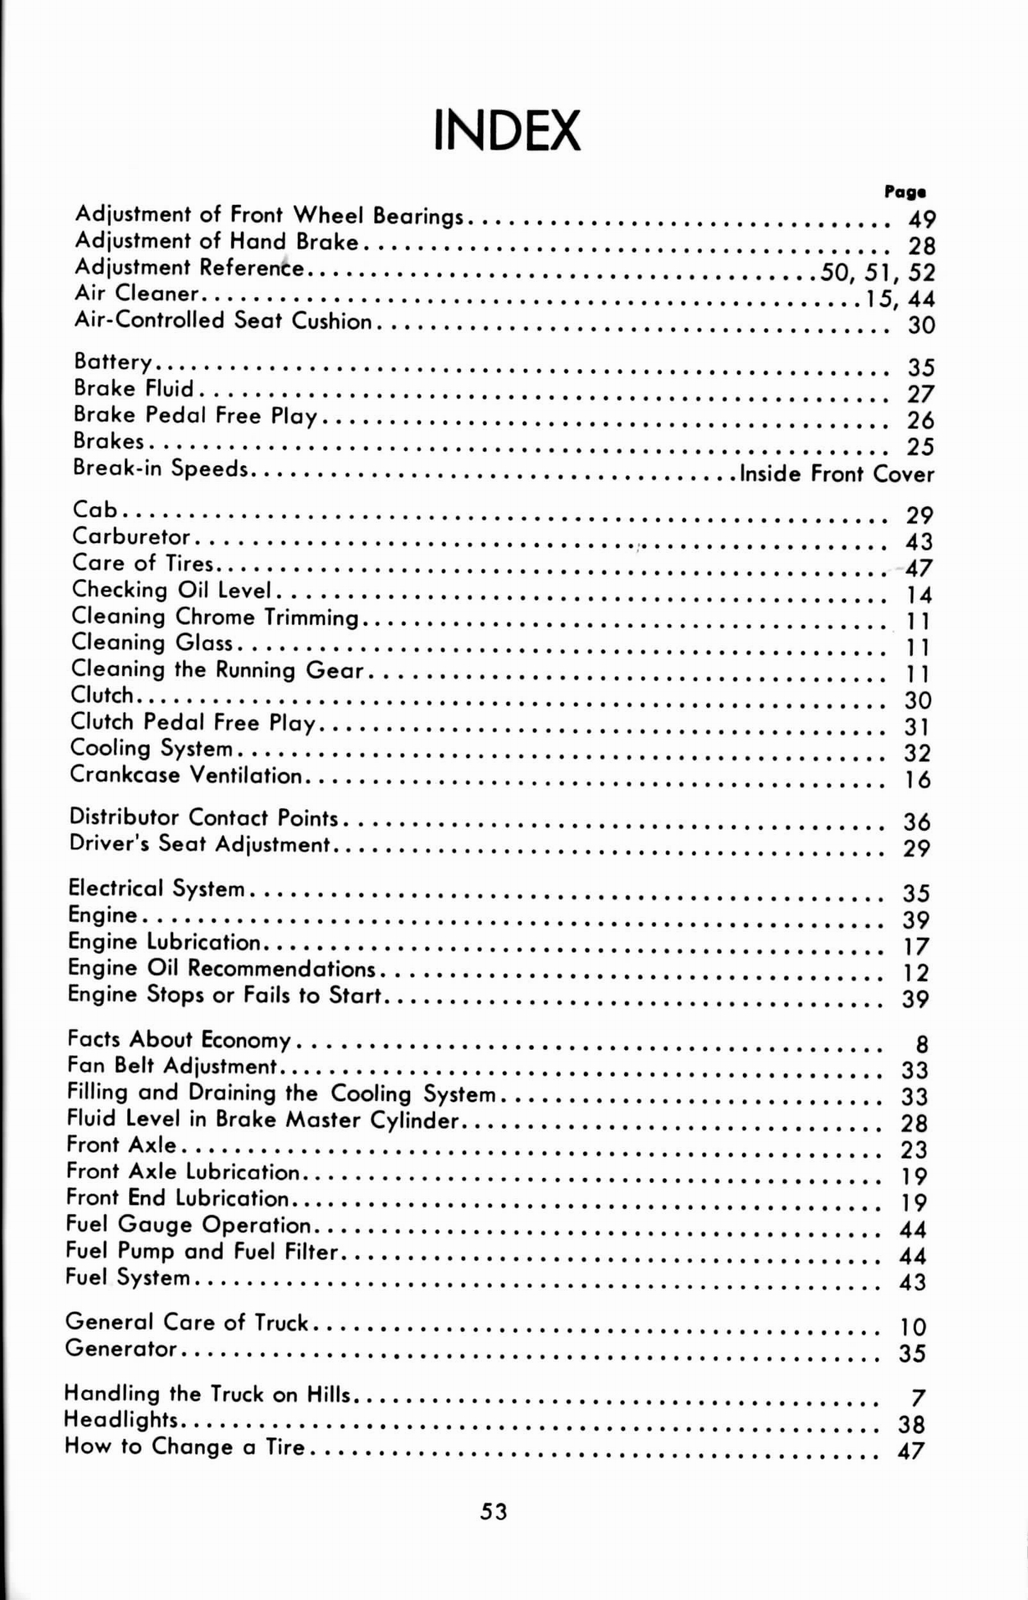 n_1949 Dodge Truck Manual-55.jpg